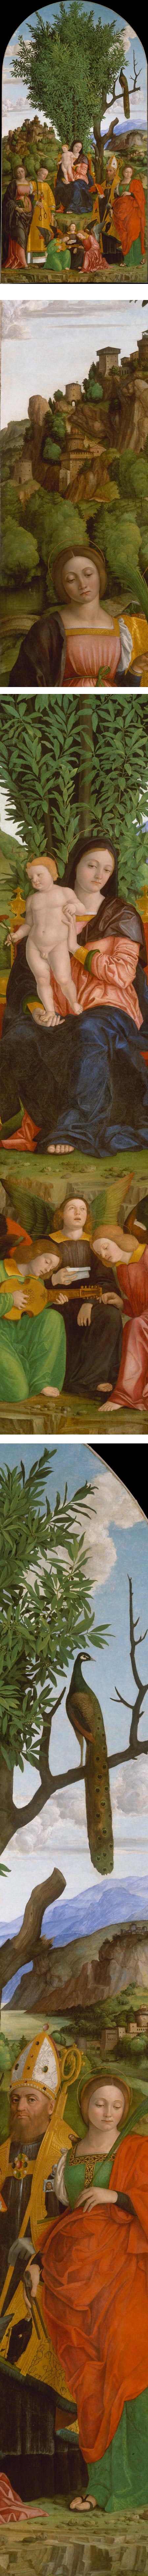 Madonna and Child with Saints, Girolamo dai Libri 